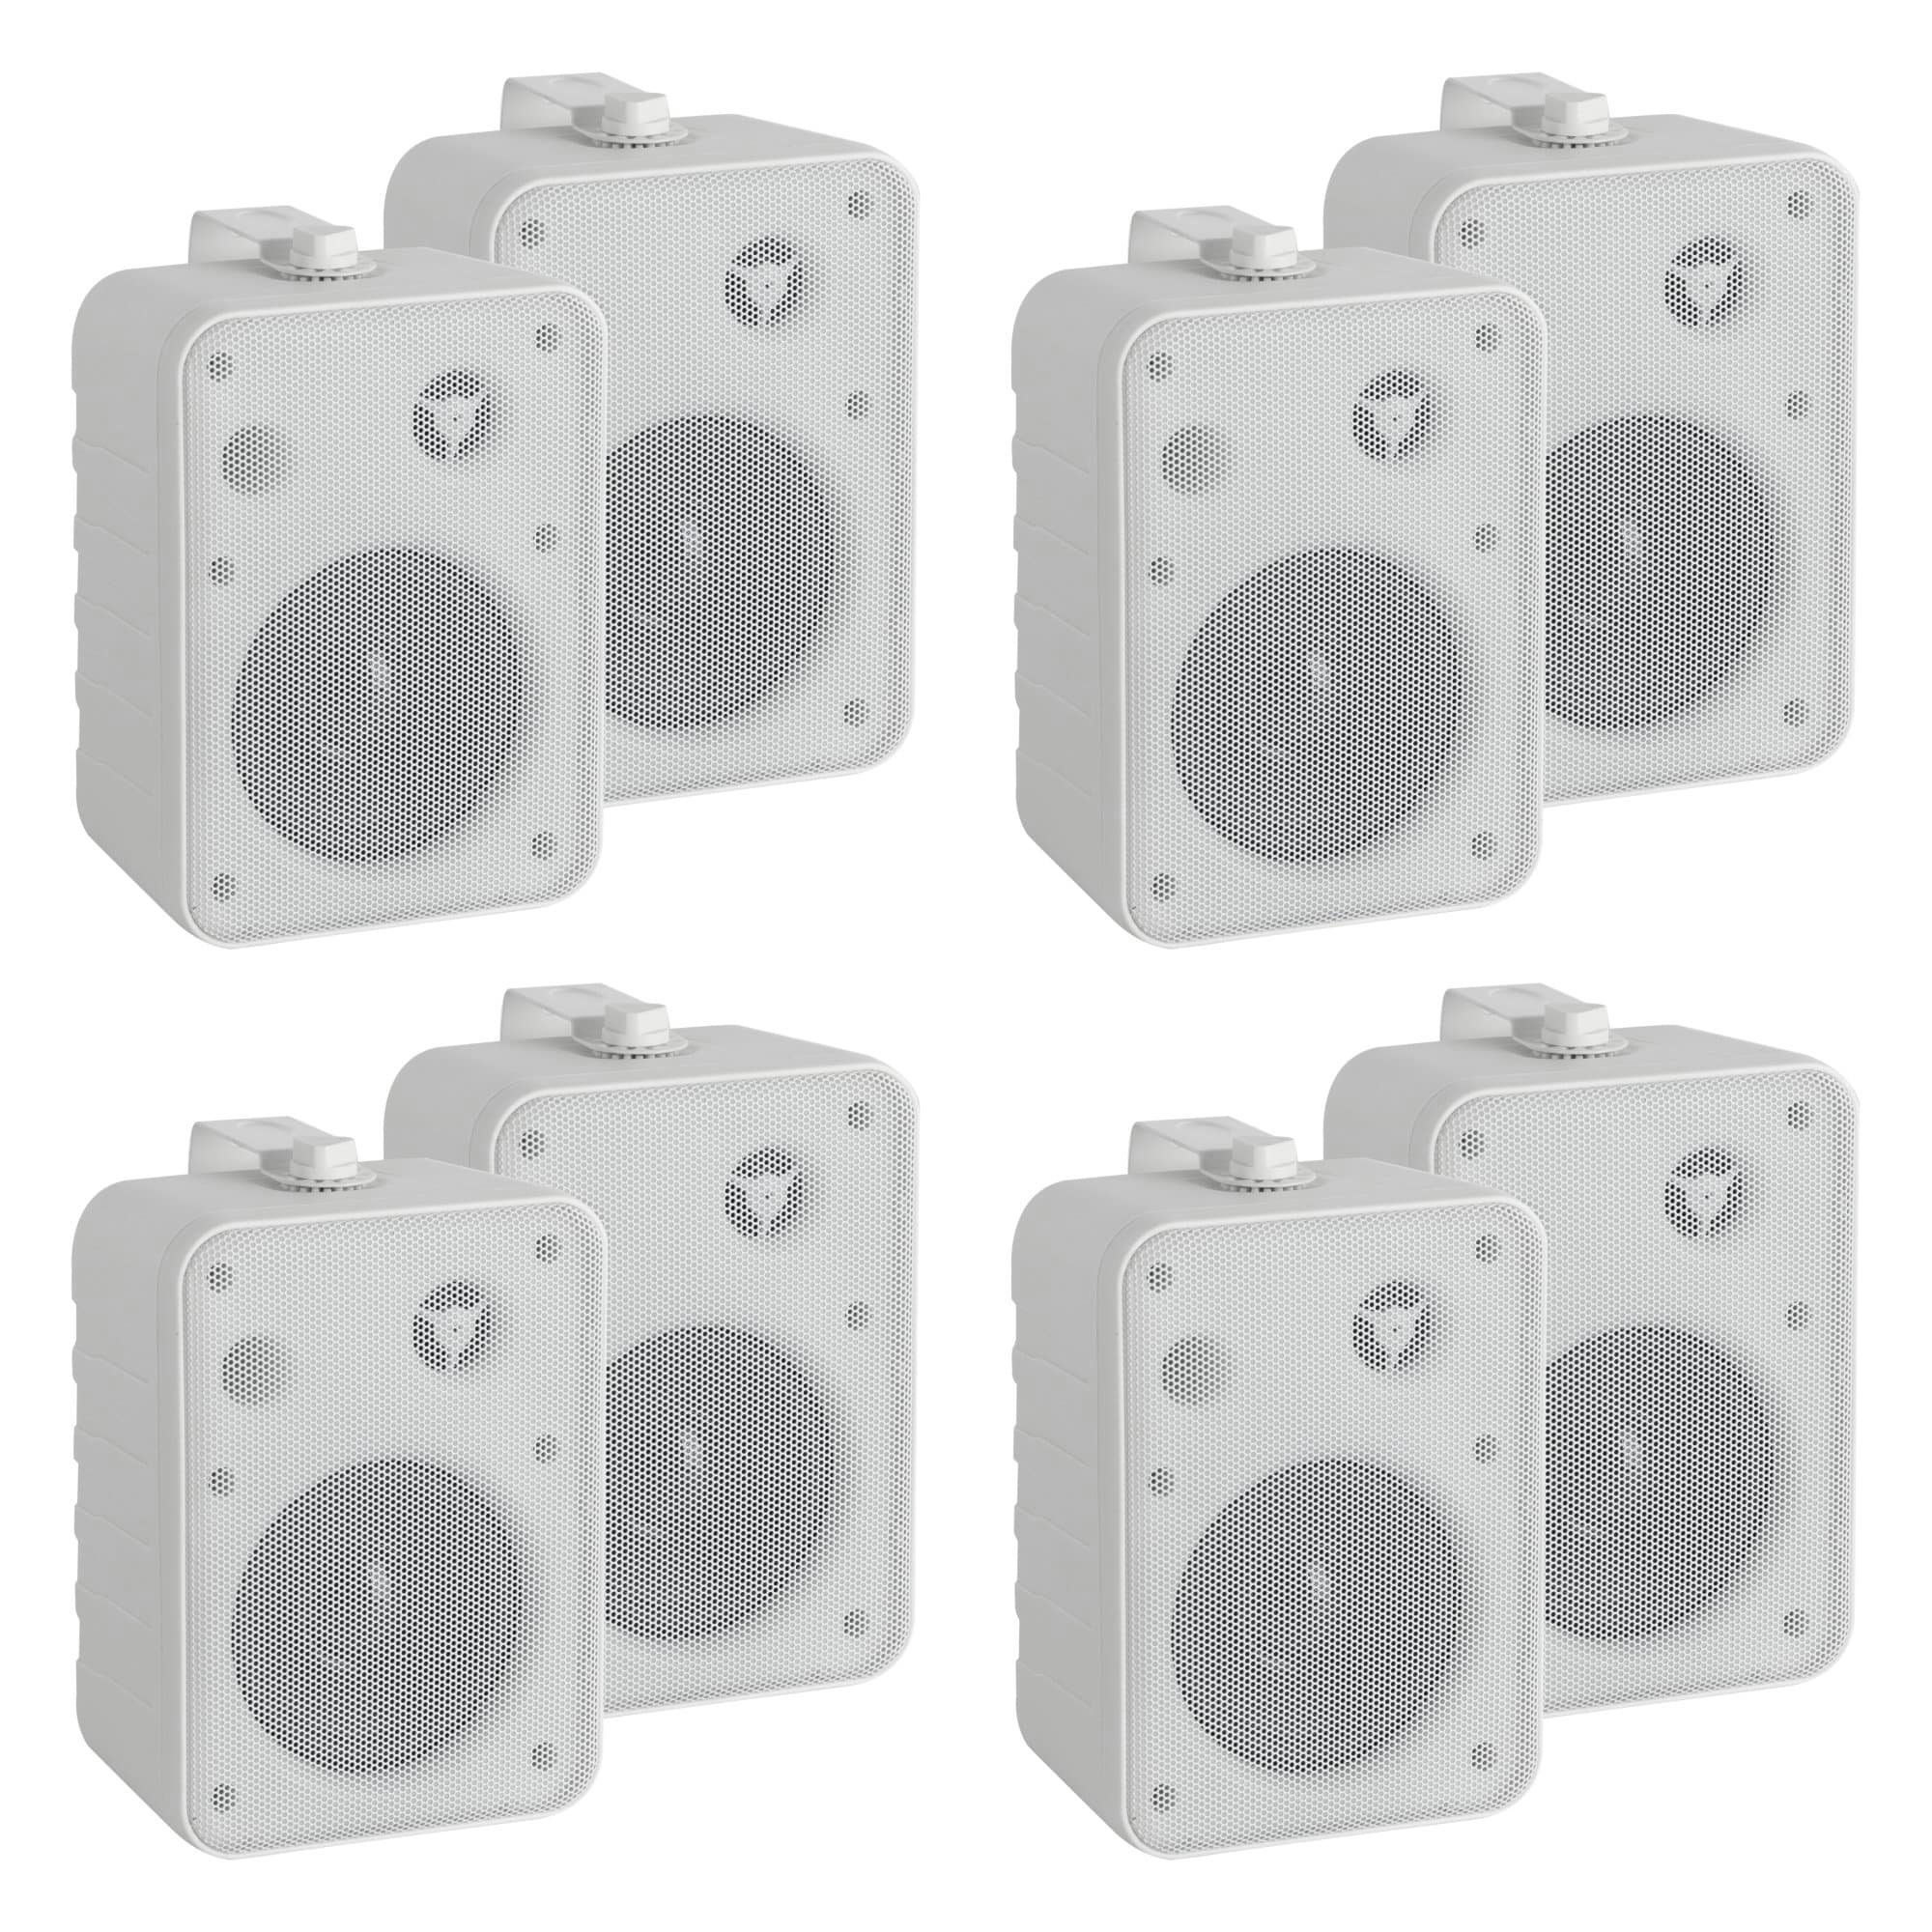 McGrey One Control MKIII HiFi-Lautsprecher - Lautsprecherboxen 4 paar Lautsprecher (10 W, Boxen für Installation, Studio oder HiFi-Anwendung) Weiß